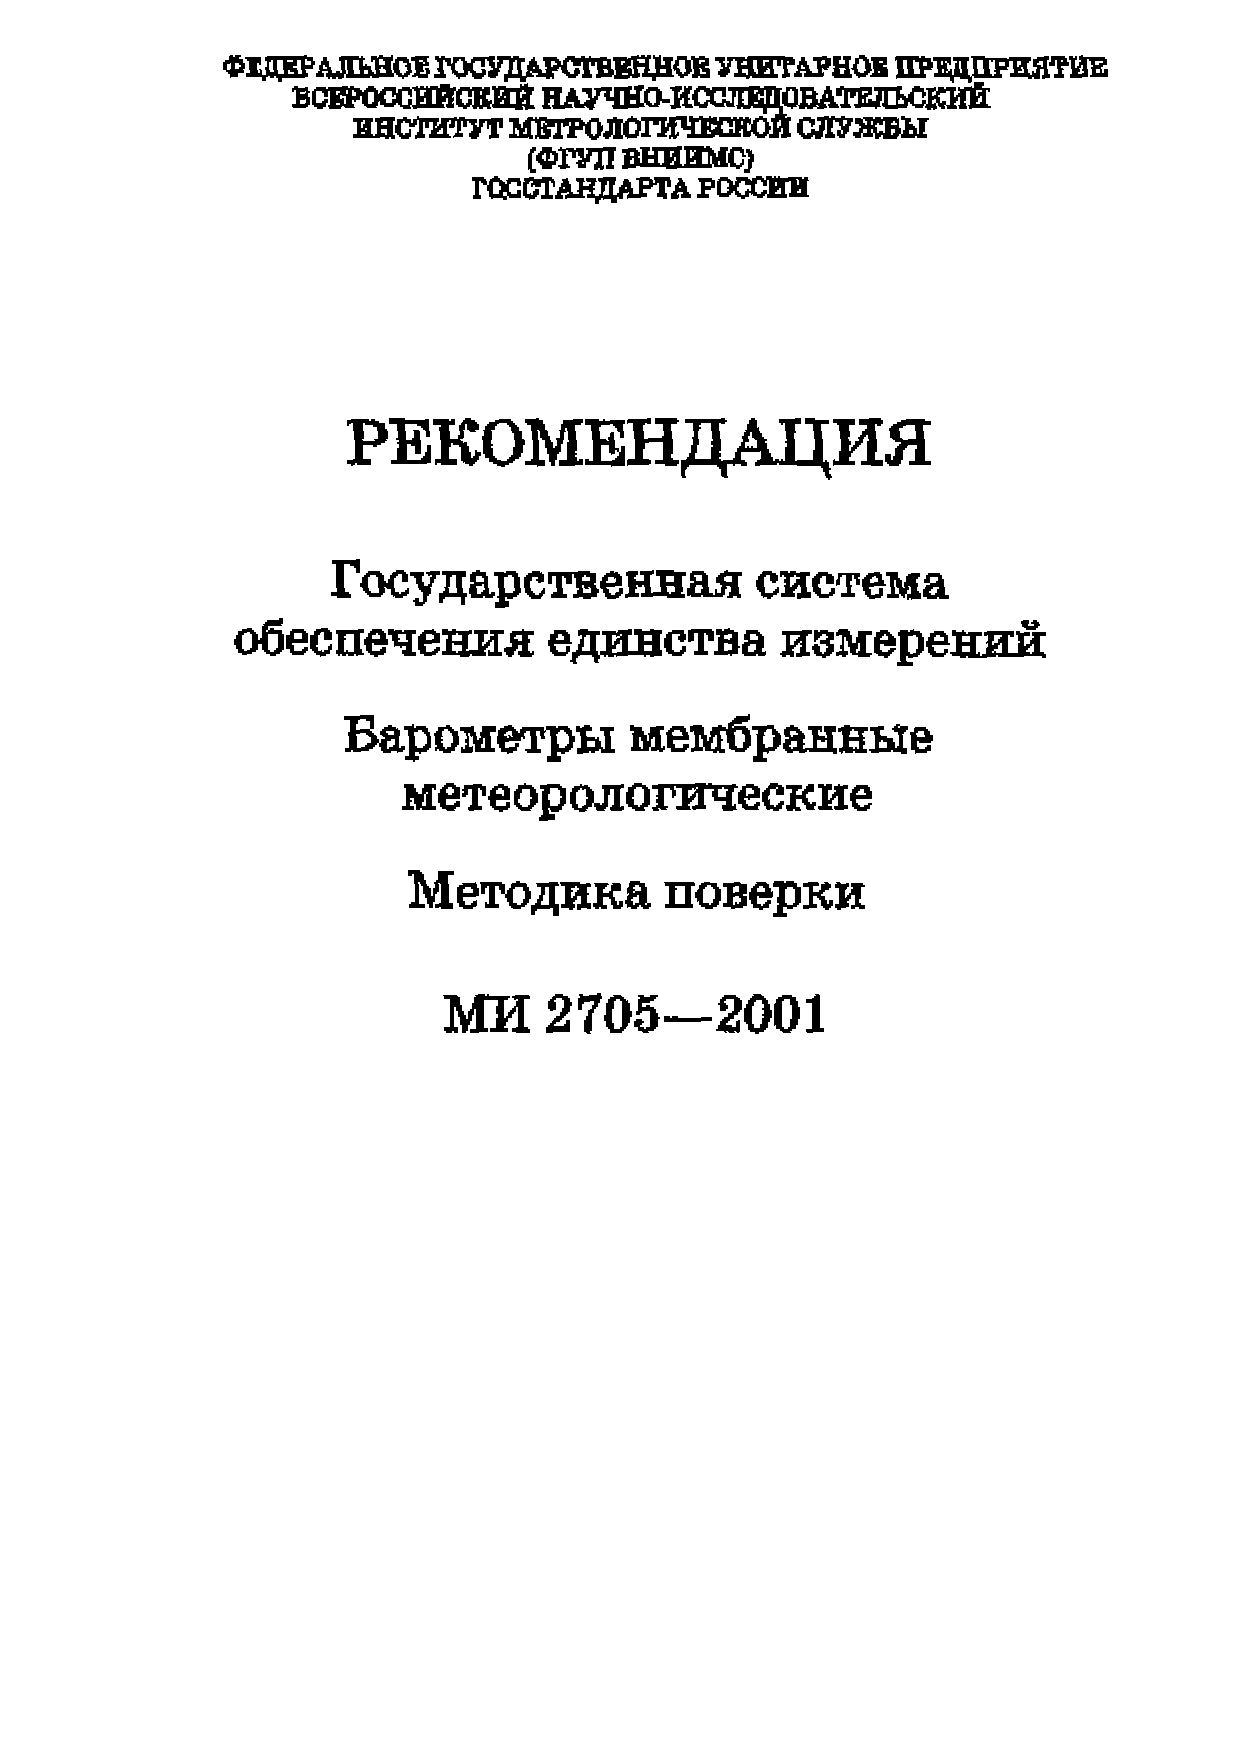 МИ 2705-2001